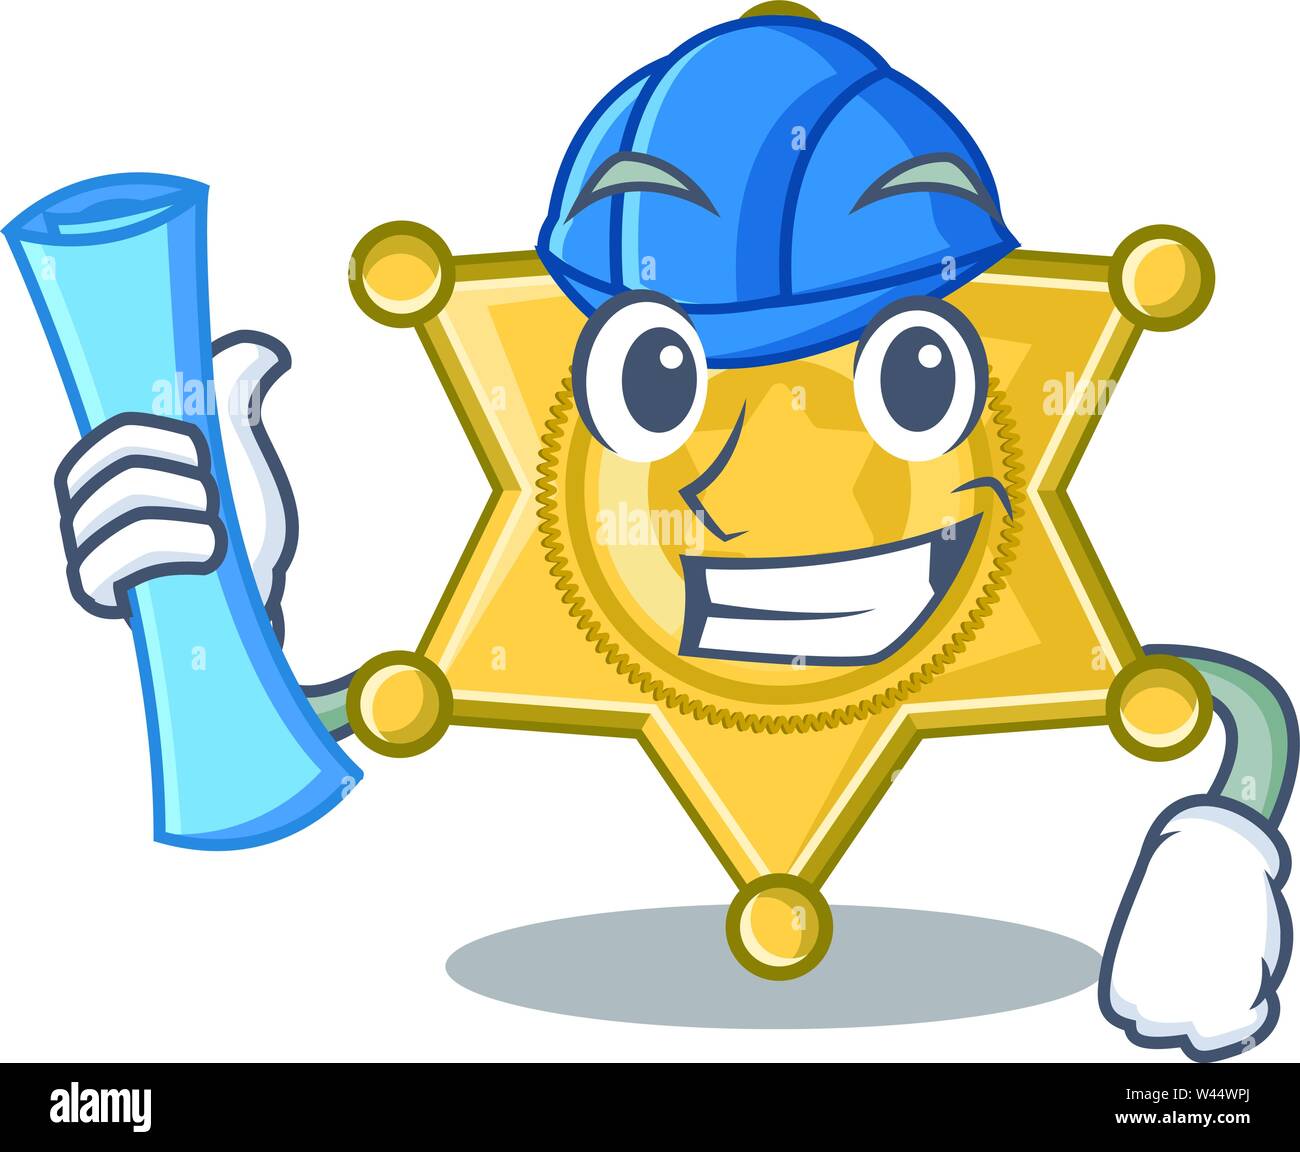 Architect star badge police on a cartoon vector illustration Stock Vector